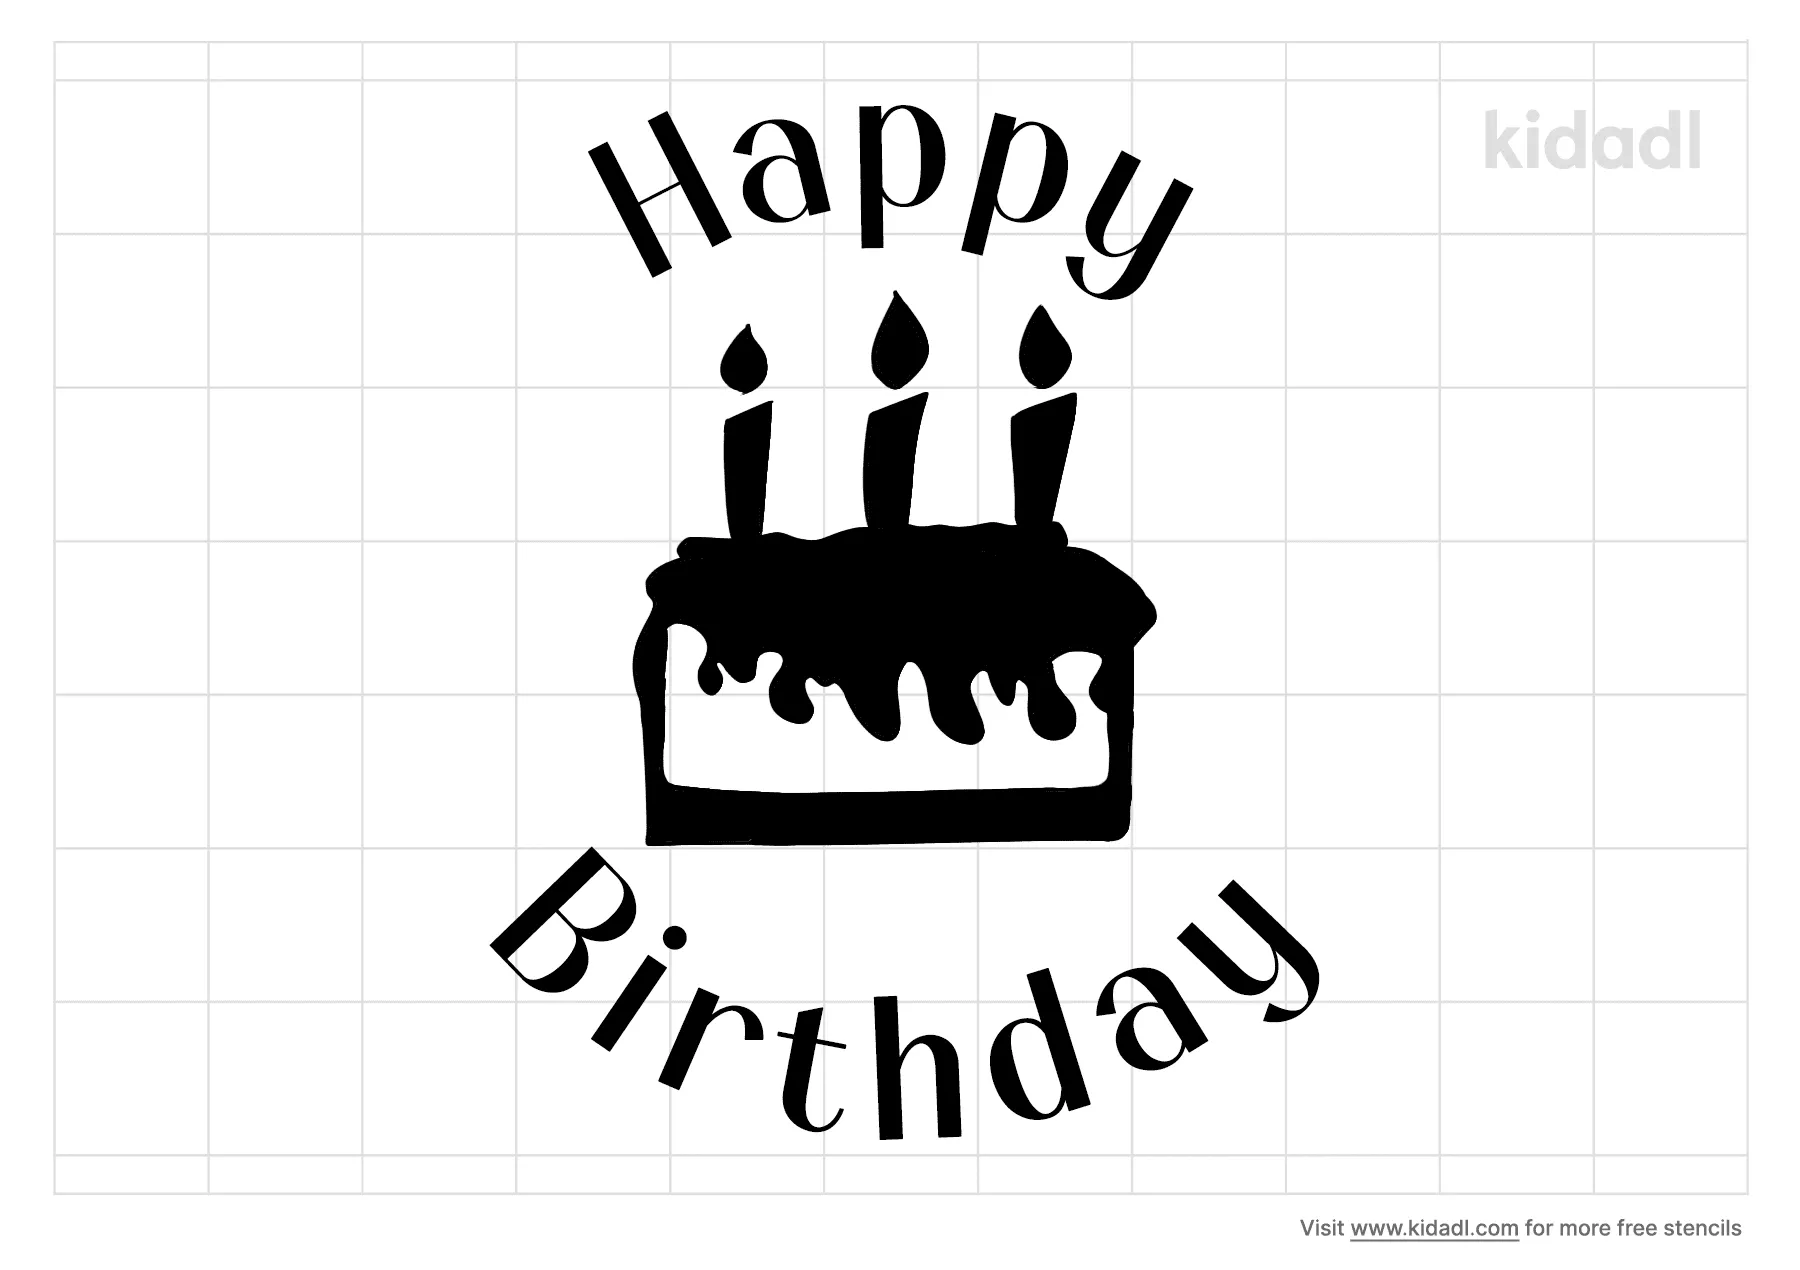 Happy Birthday Cake Stencils Free Printable Birthdays Stencils Kidadl And Birthdays Stencils Free Printable Stencils Kidadl